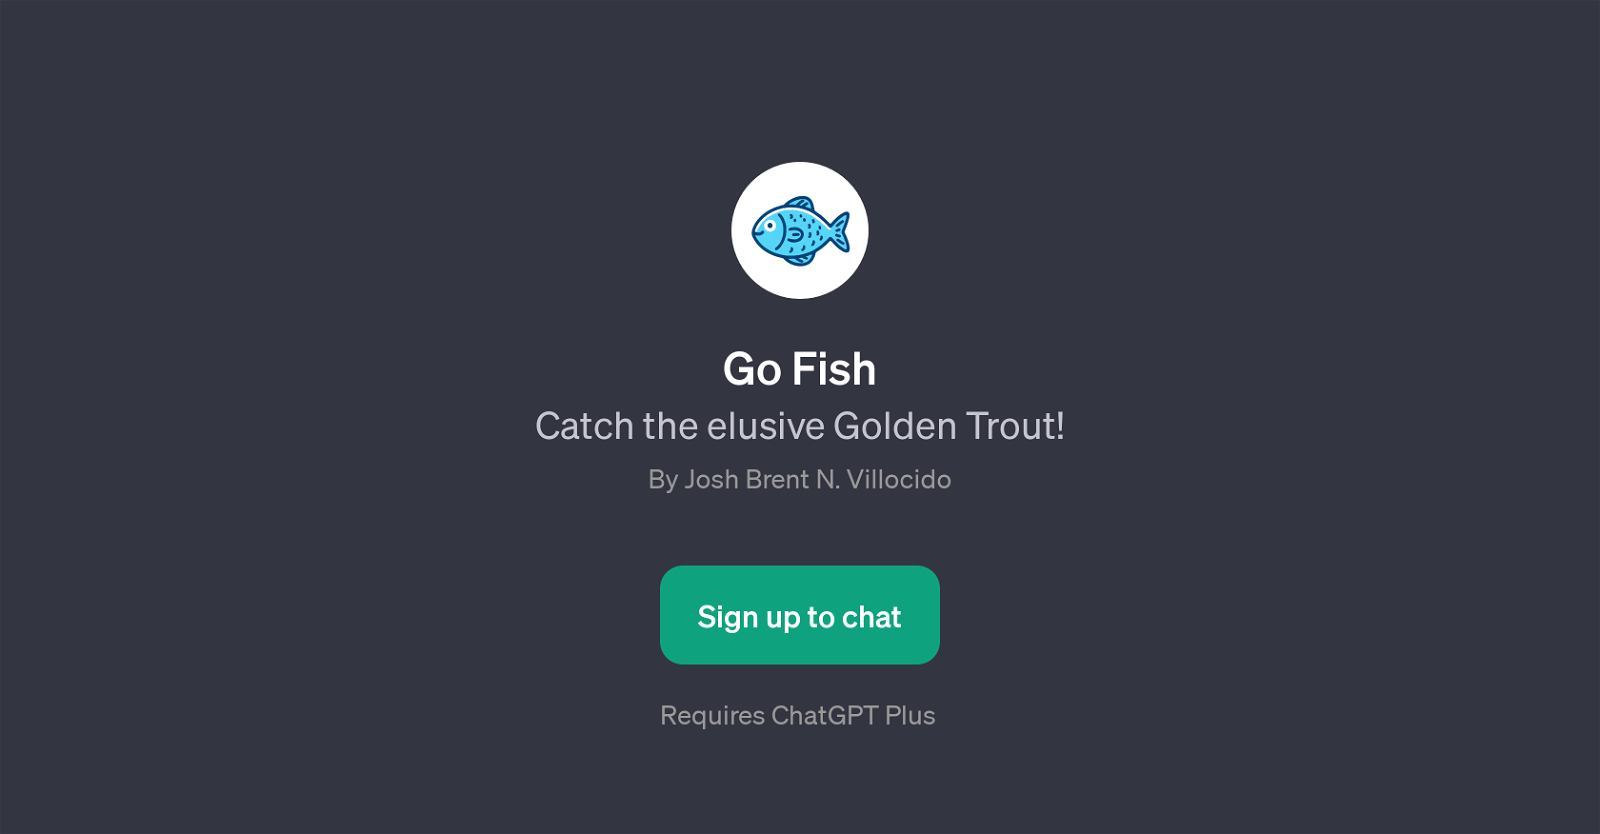 Go Fish website